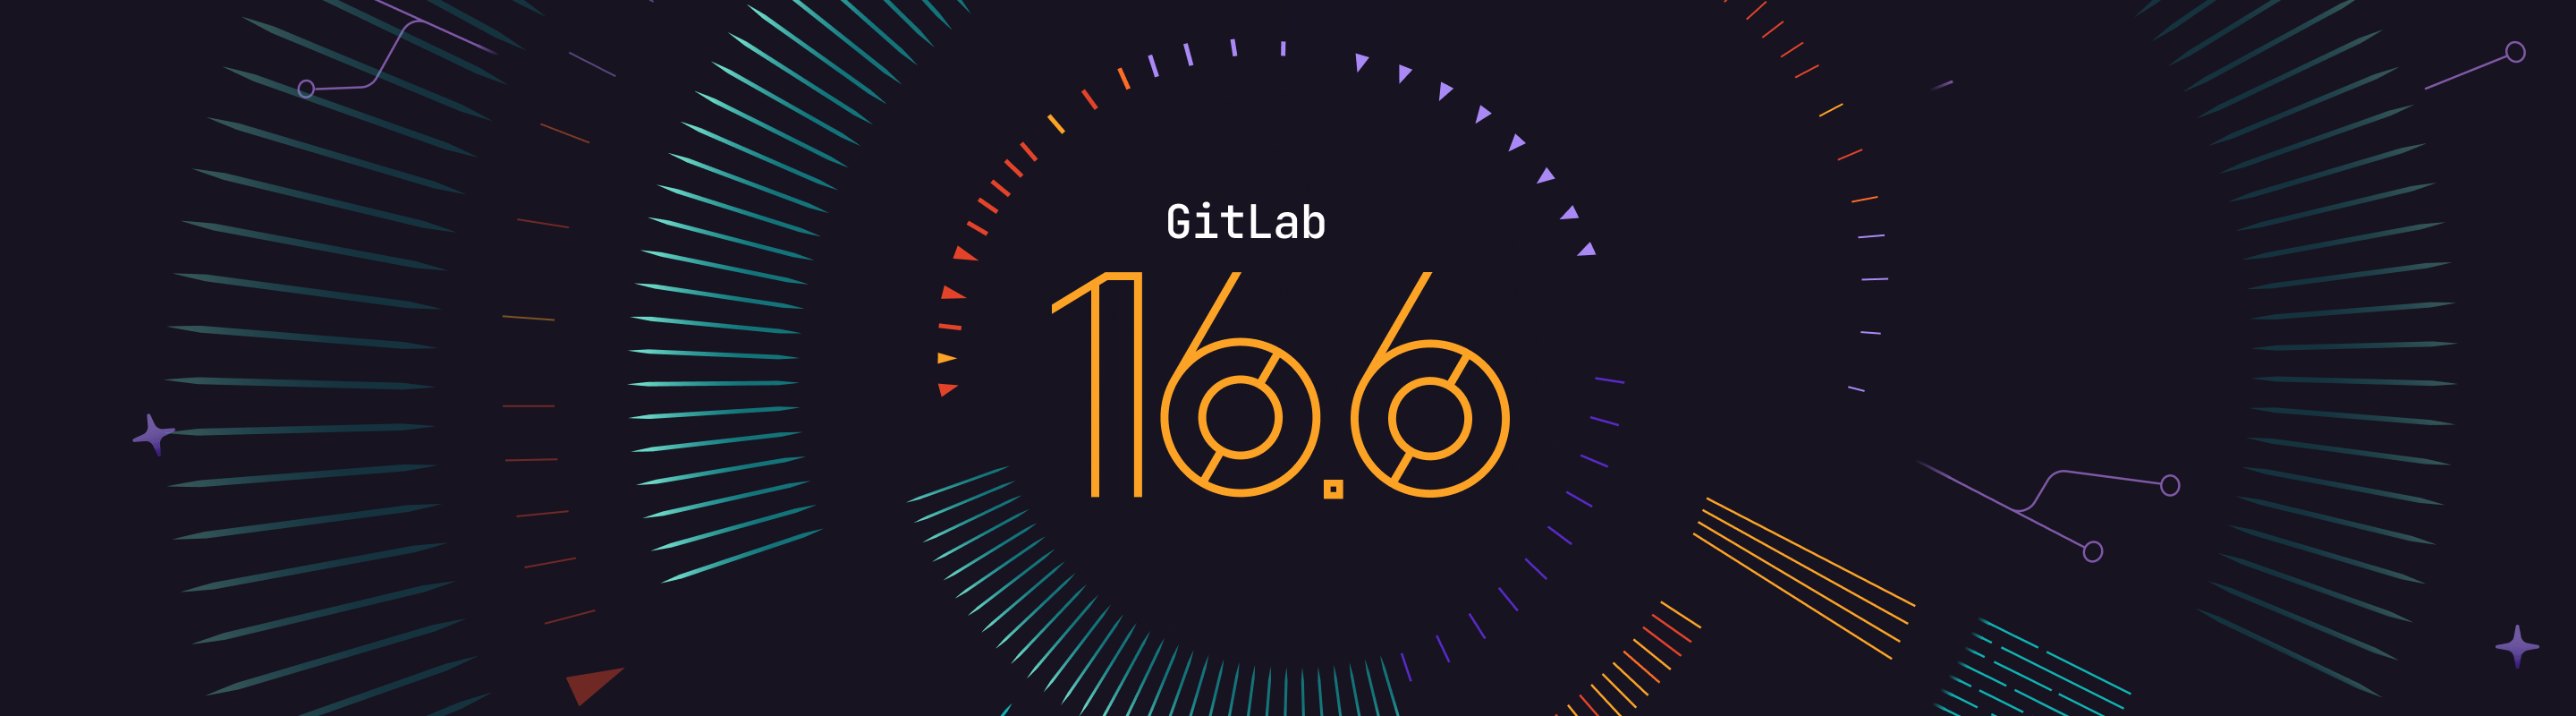 GitLab 16.6